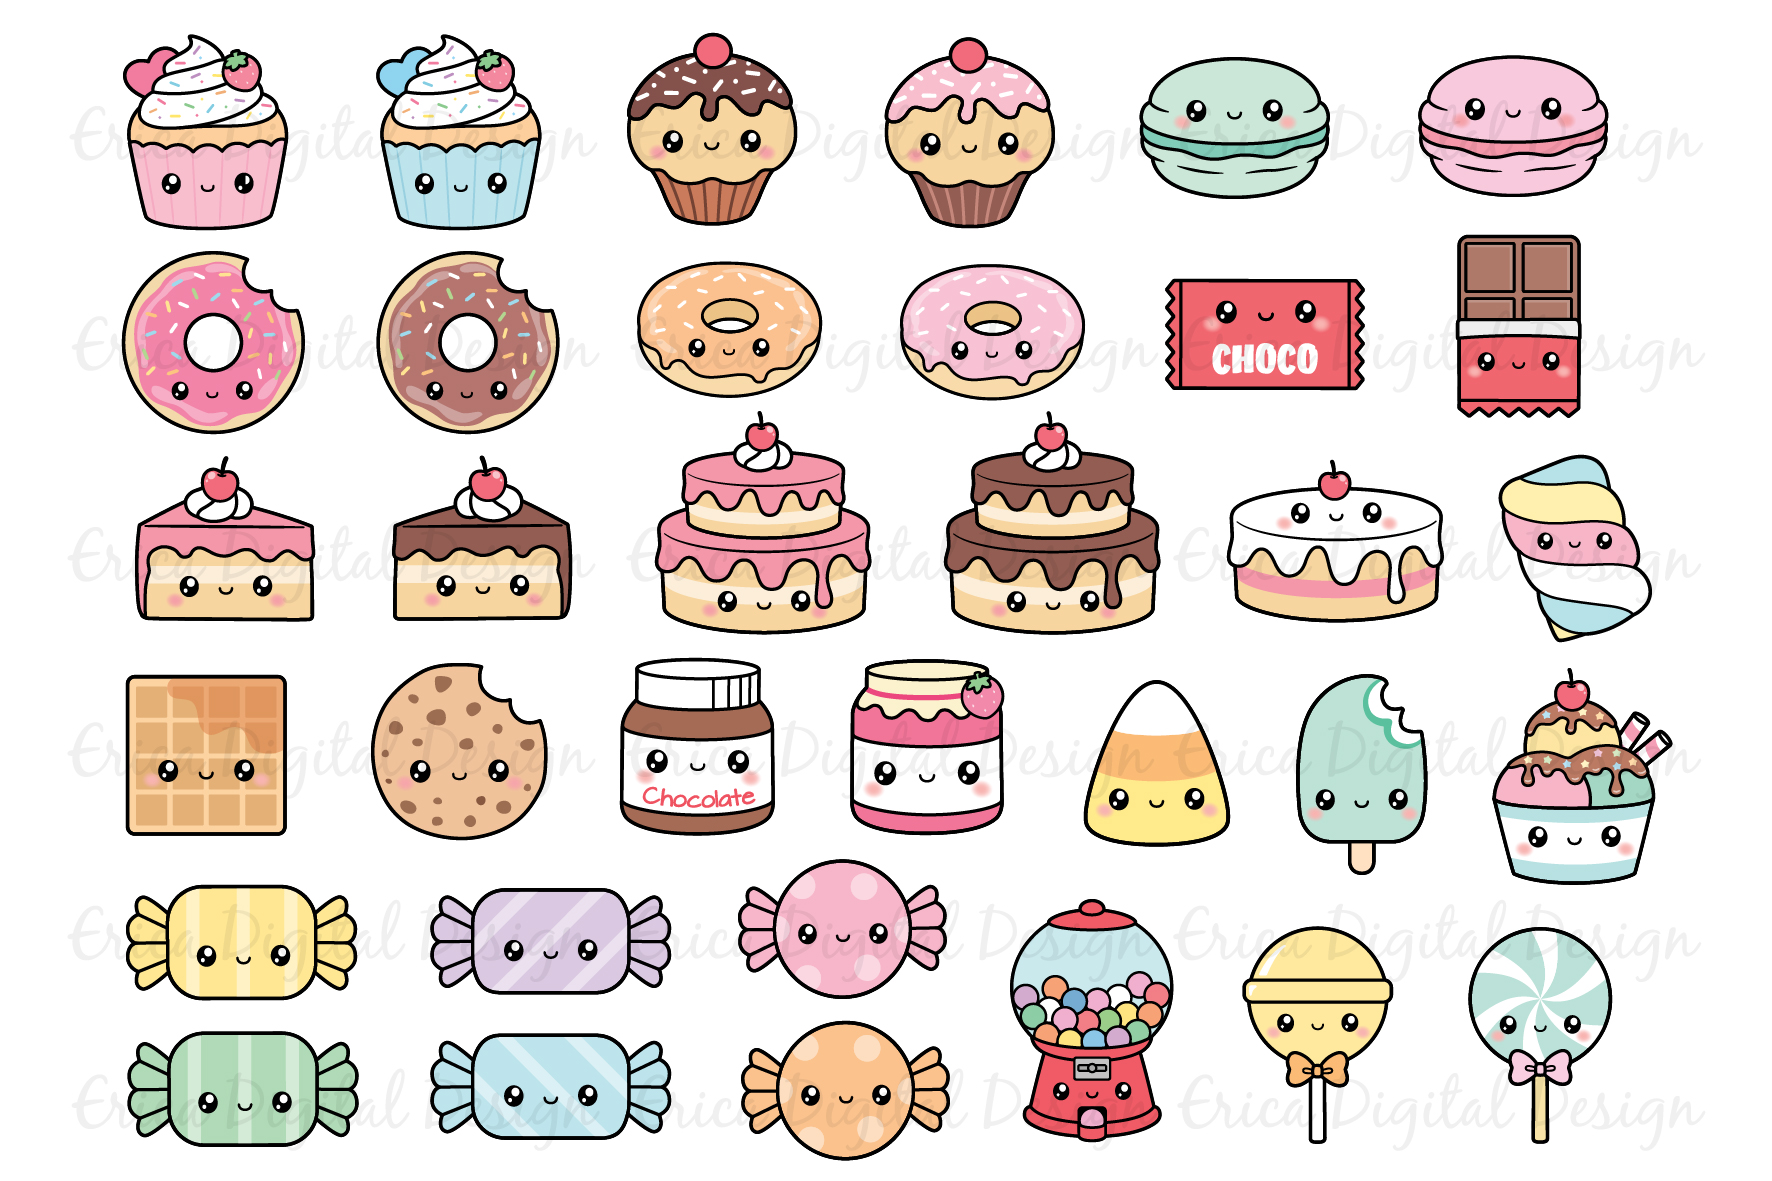 Kawaii Sweets clipart set - 34 cute food images (520385